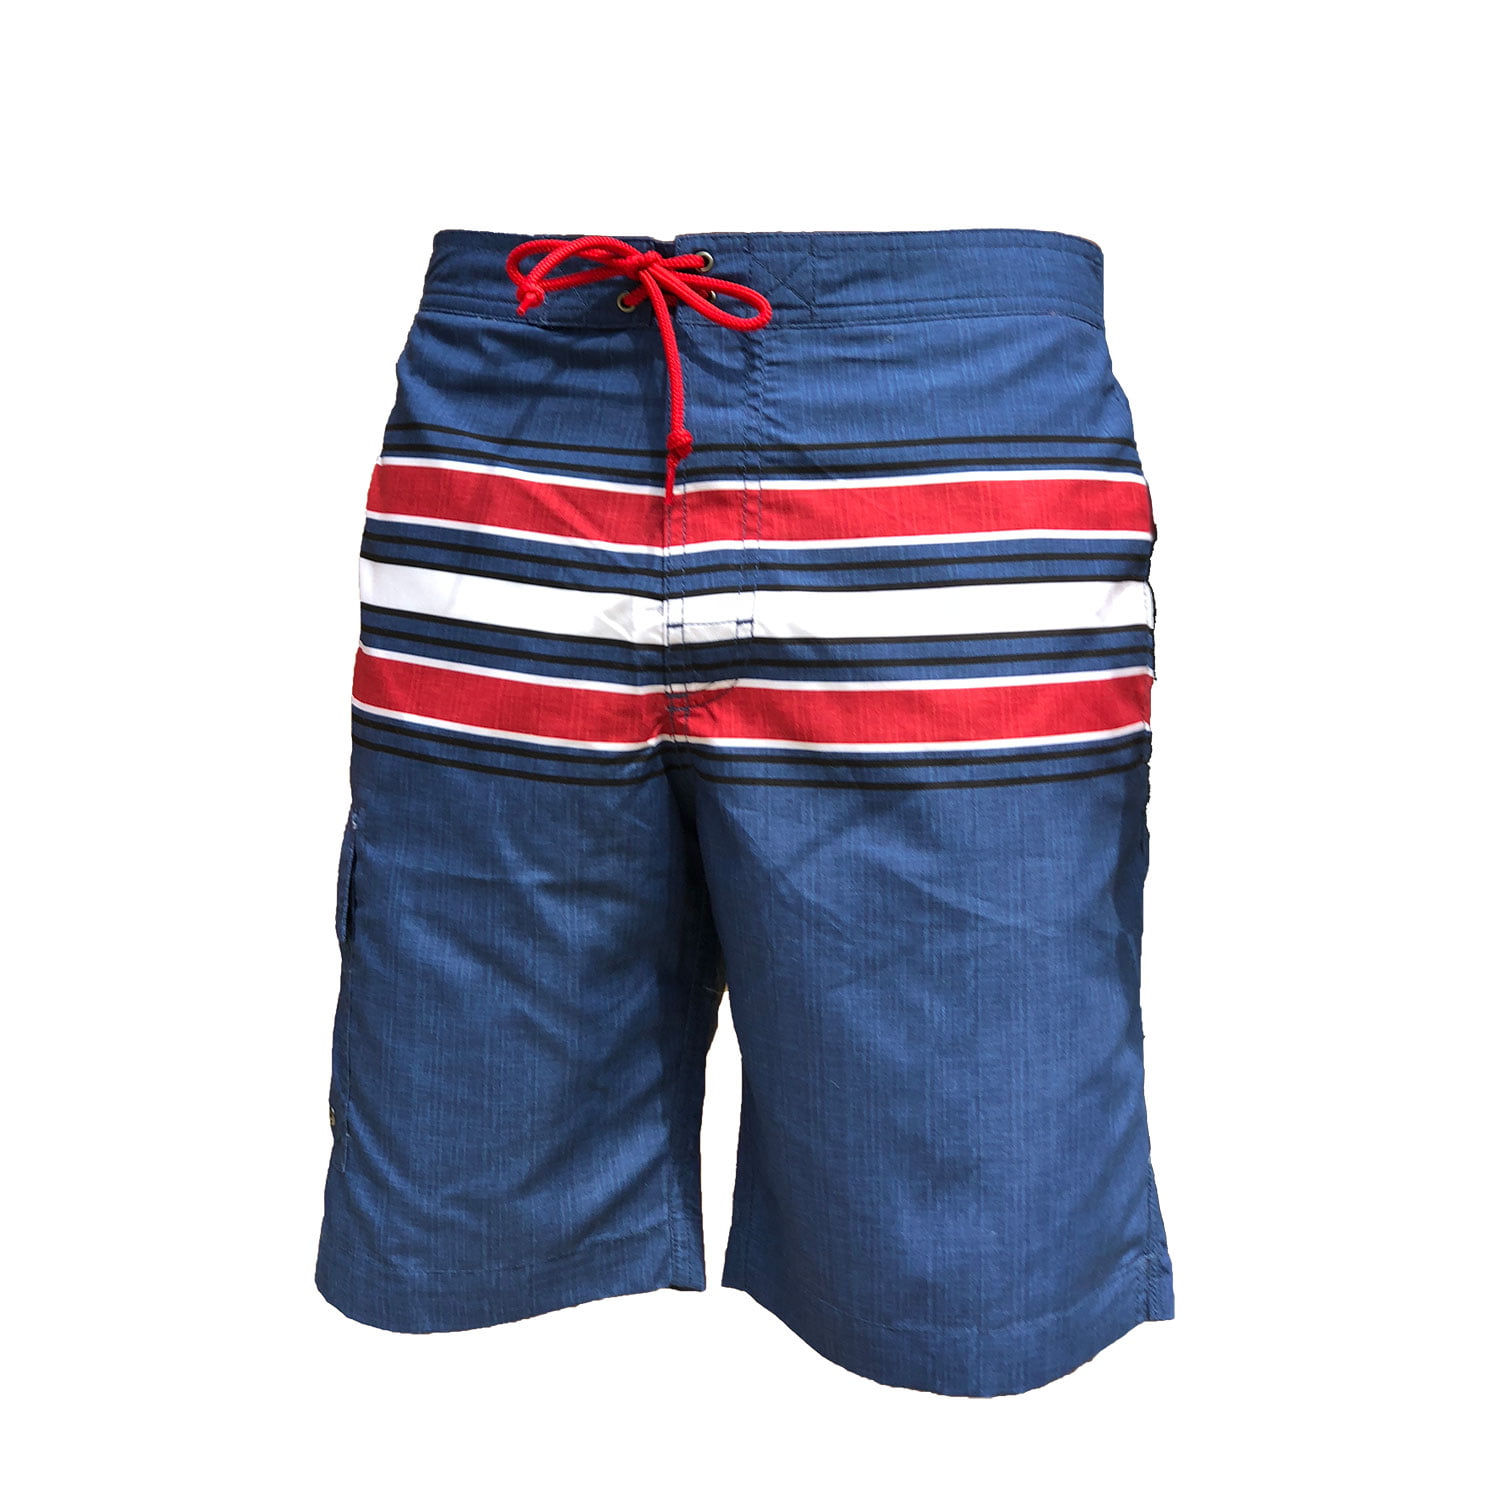 Chaps Men's Swimwear Bottom Shorts Swim Trunks - Walmart.com